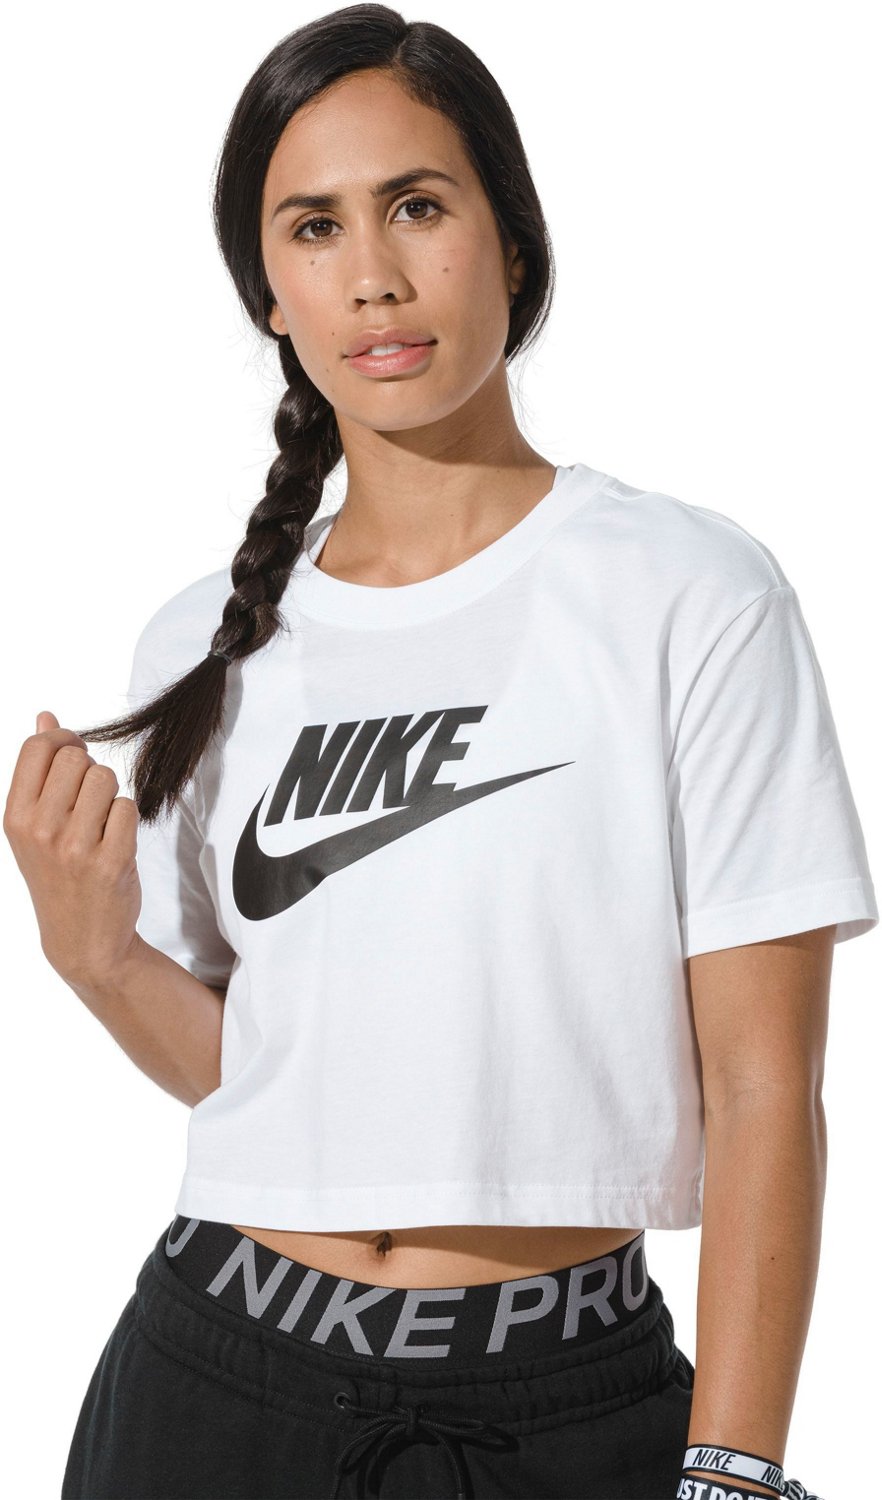 Women's Nike Shirts  Price Match Guaranteed